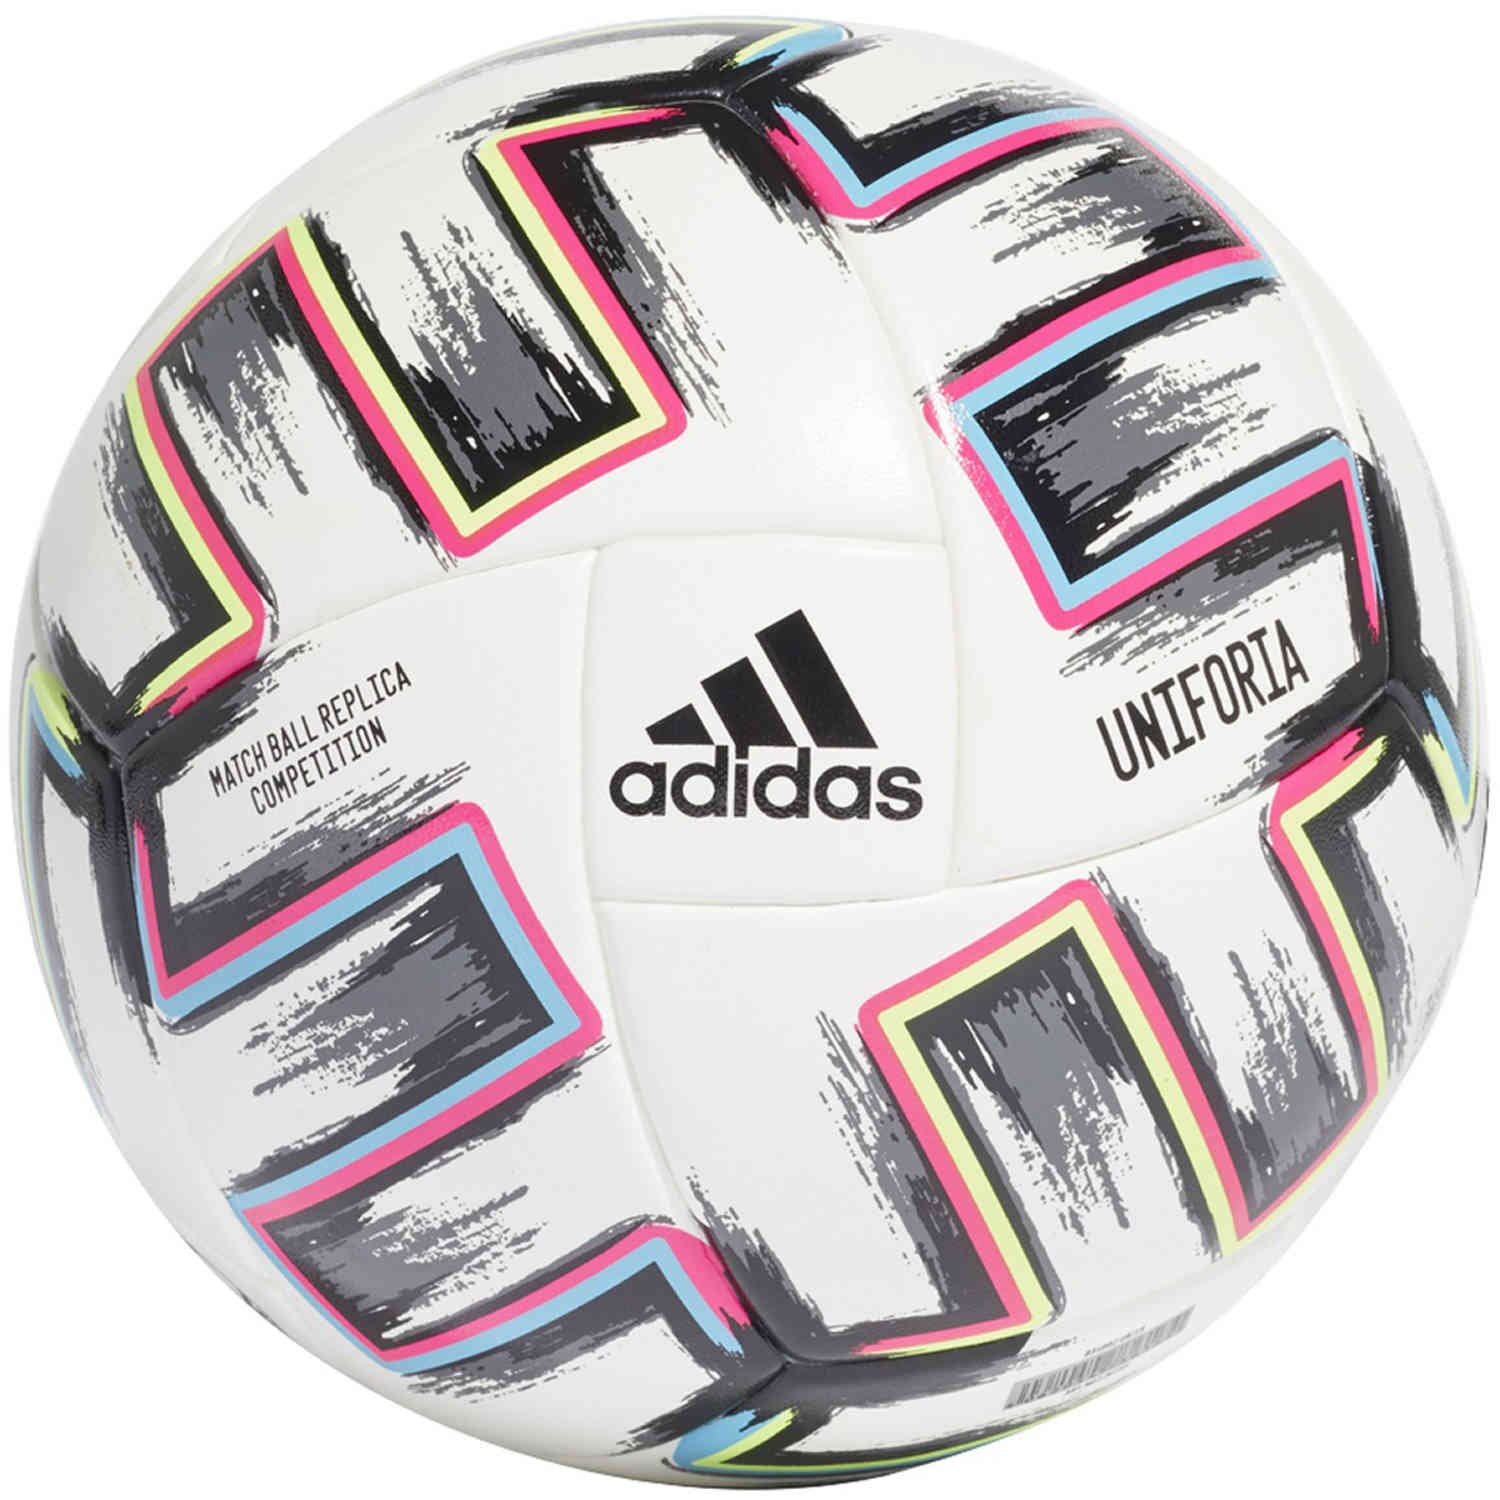 uniforia competition soccer ball